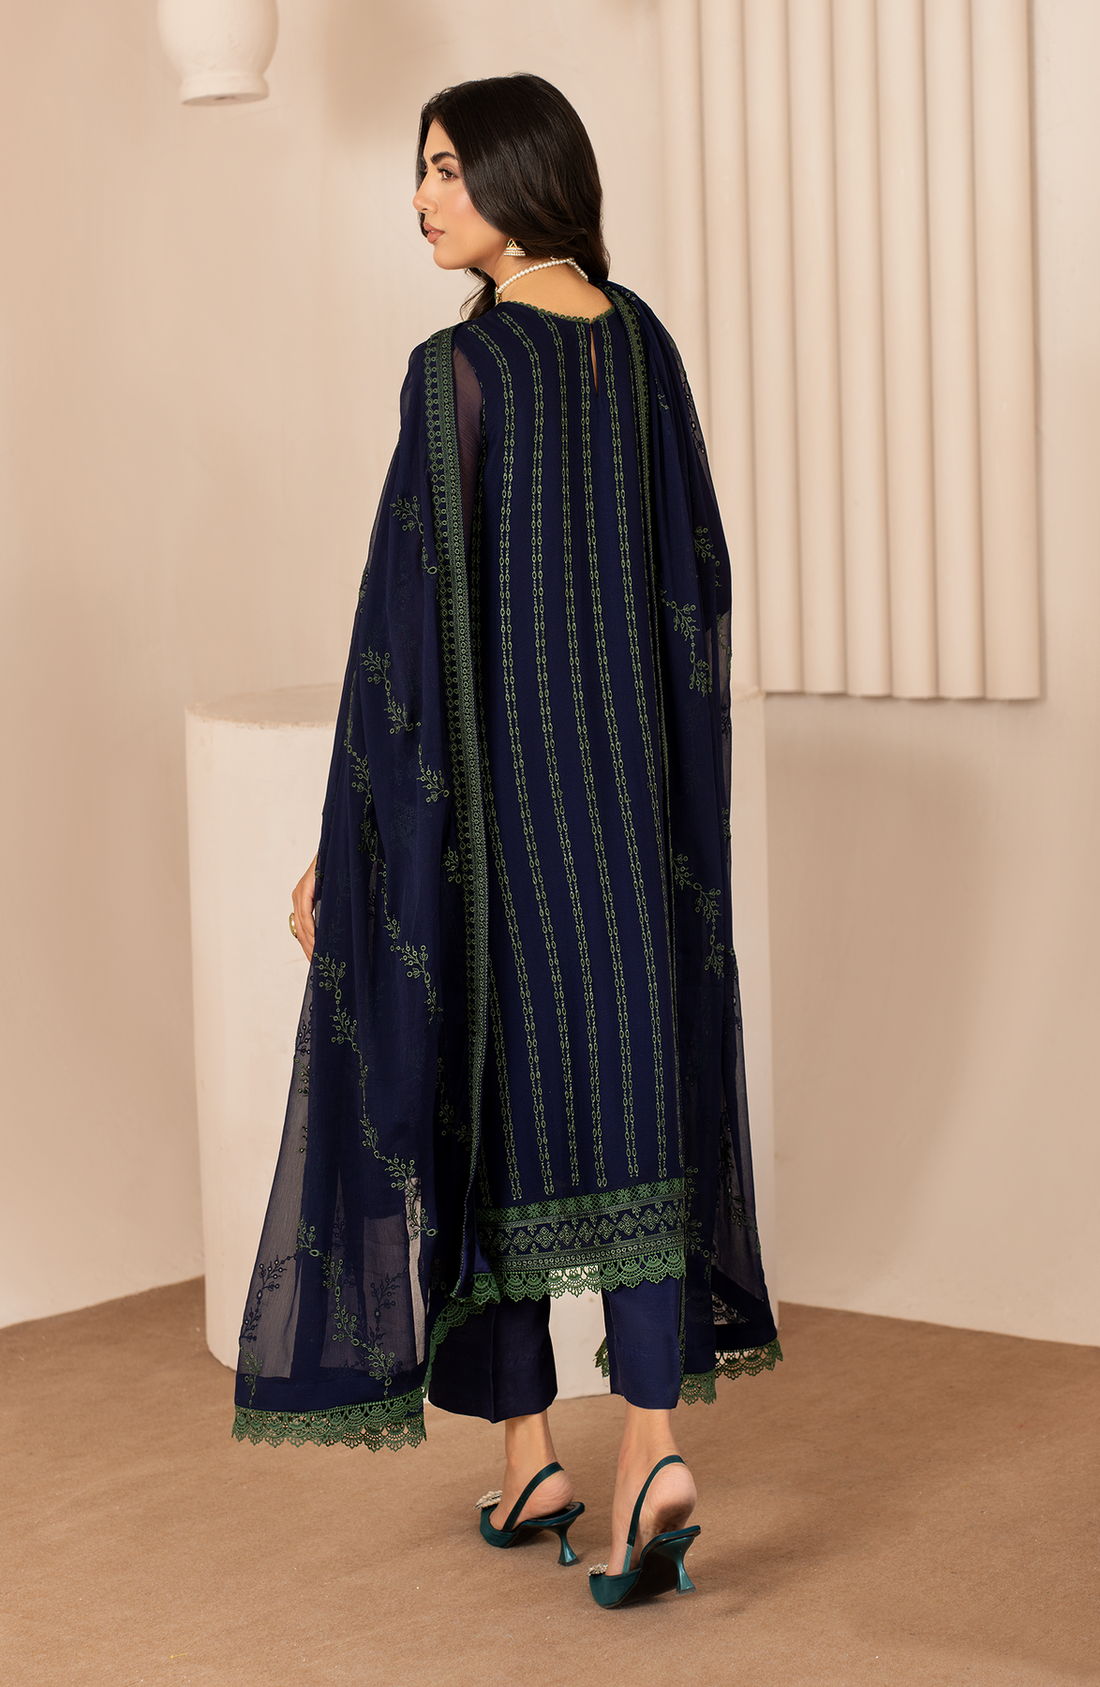 Zarif | Chiffon Edit  | ZL 06 MAHAY - Khanumjan  Pakistani Clothes and Designer Dresses in UK, USA 